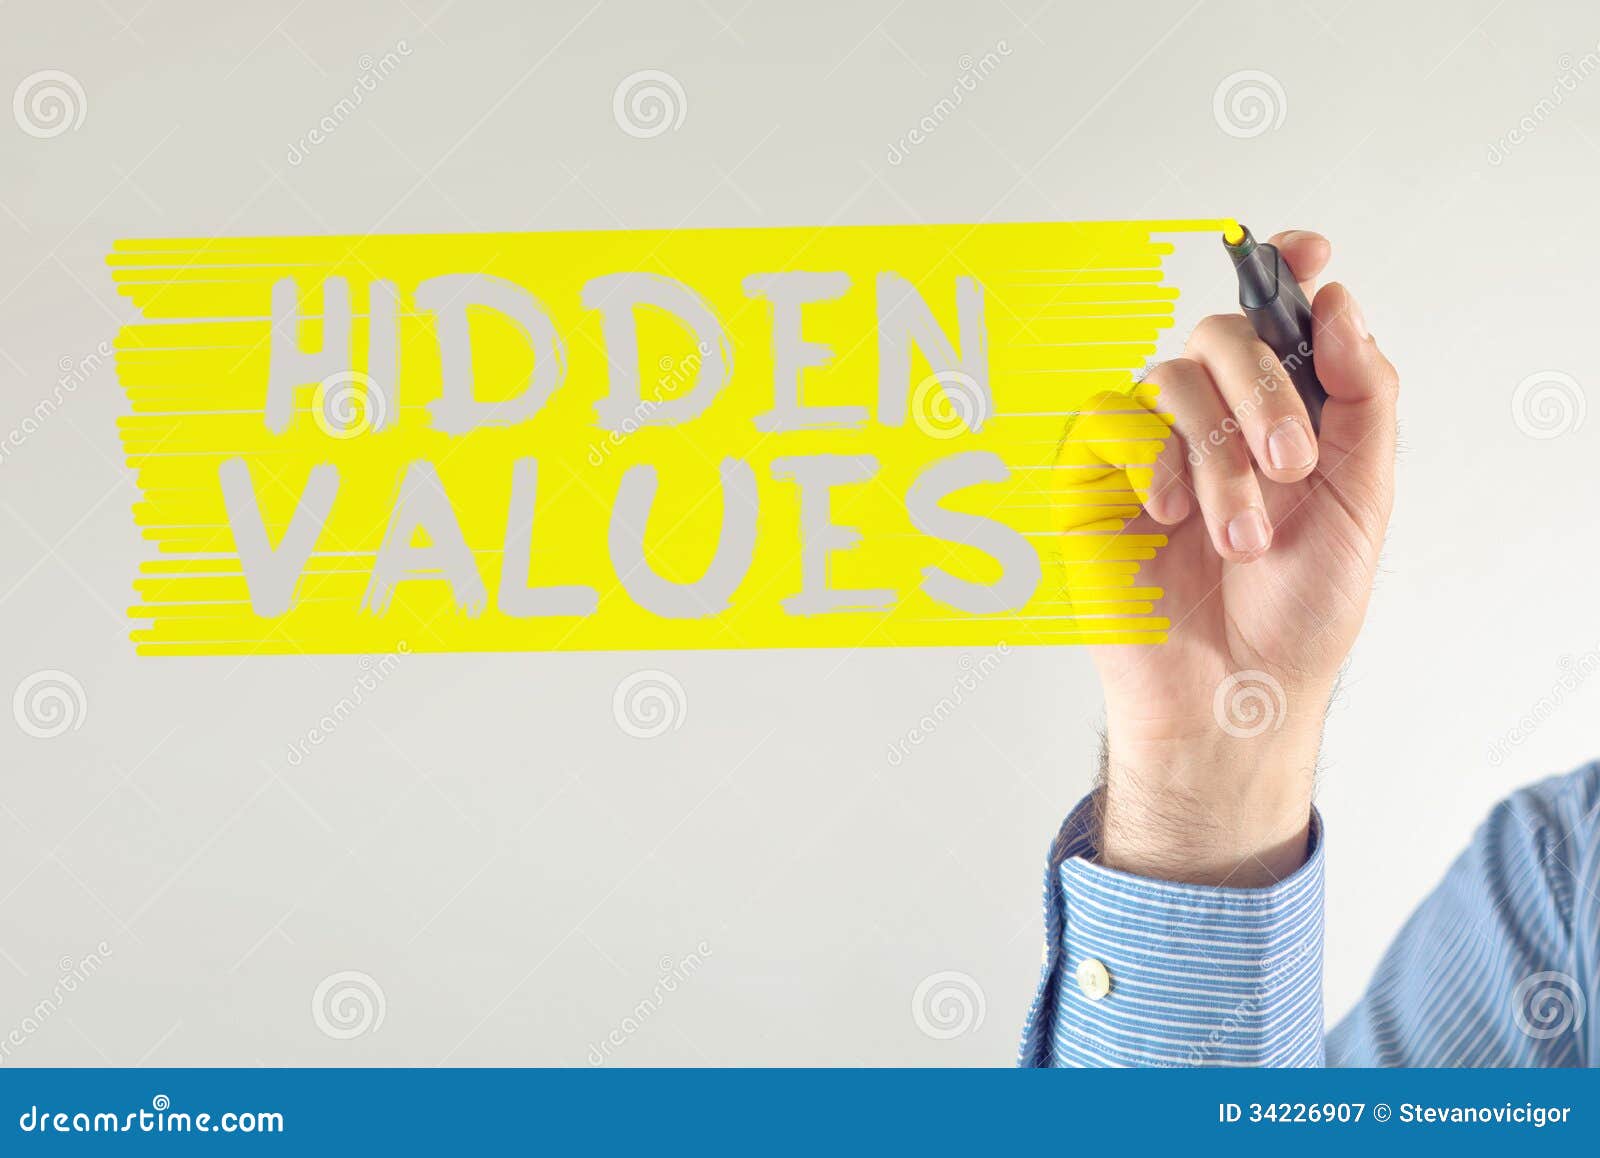 hidden values